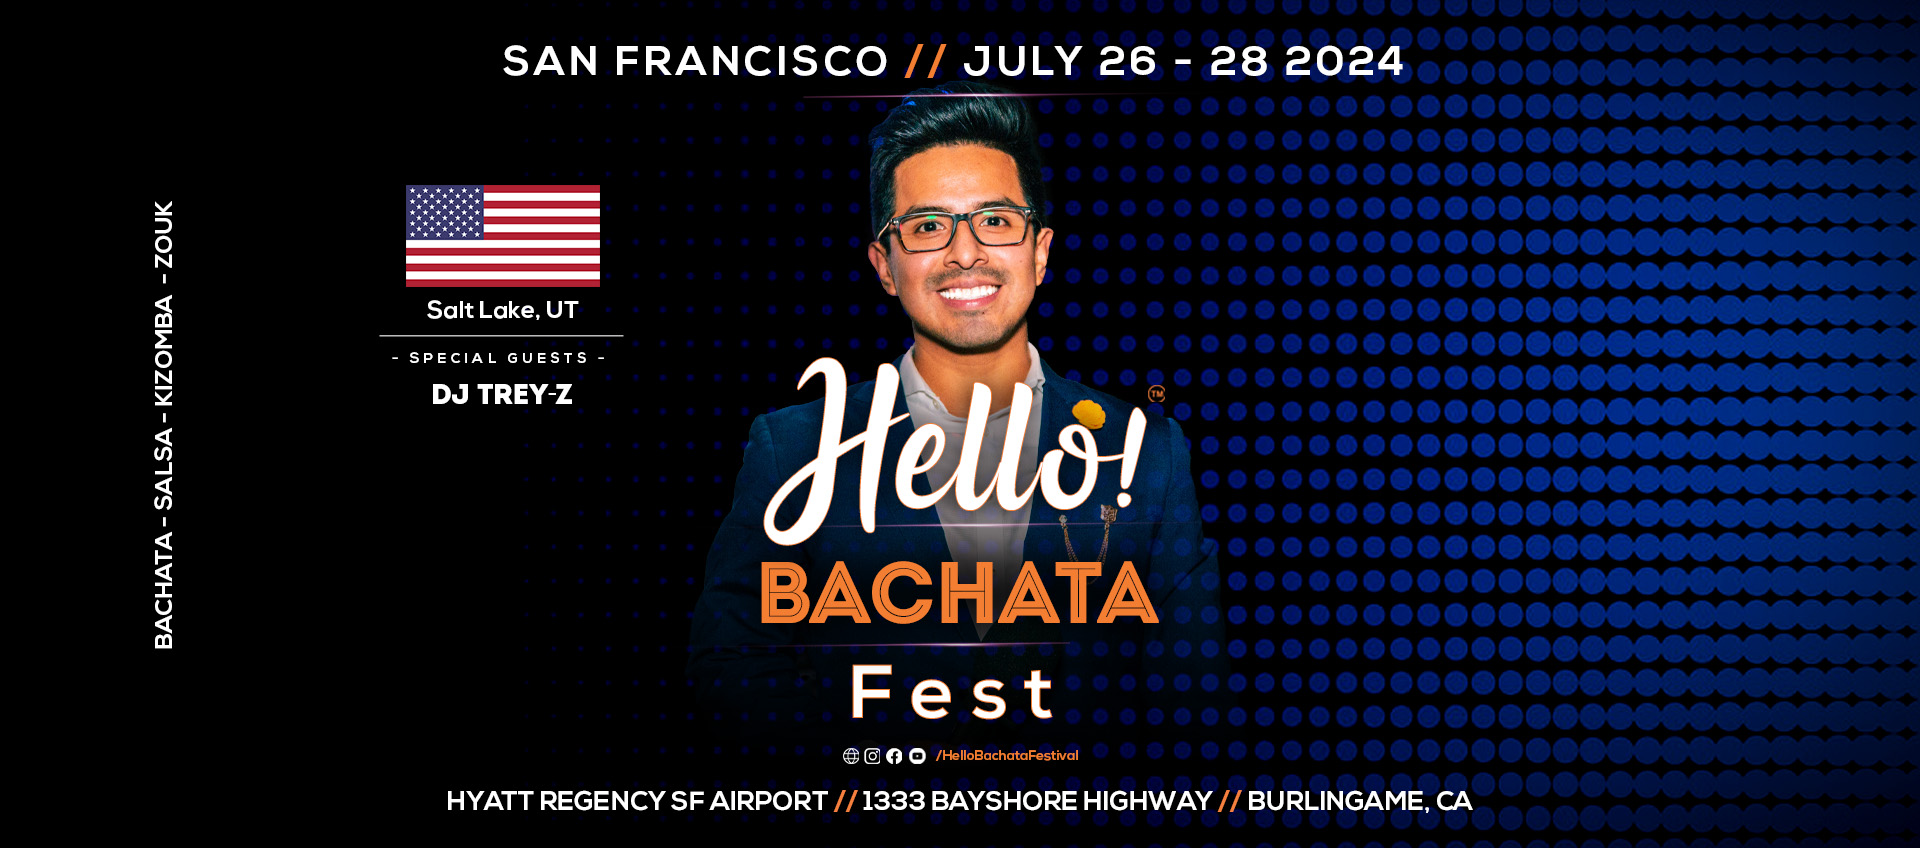 Hello! Bachata Fest - DJ Trey-Z - Salt Lake City, Utah - Bachata